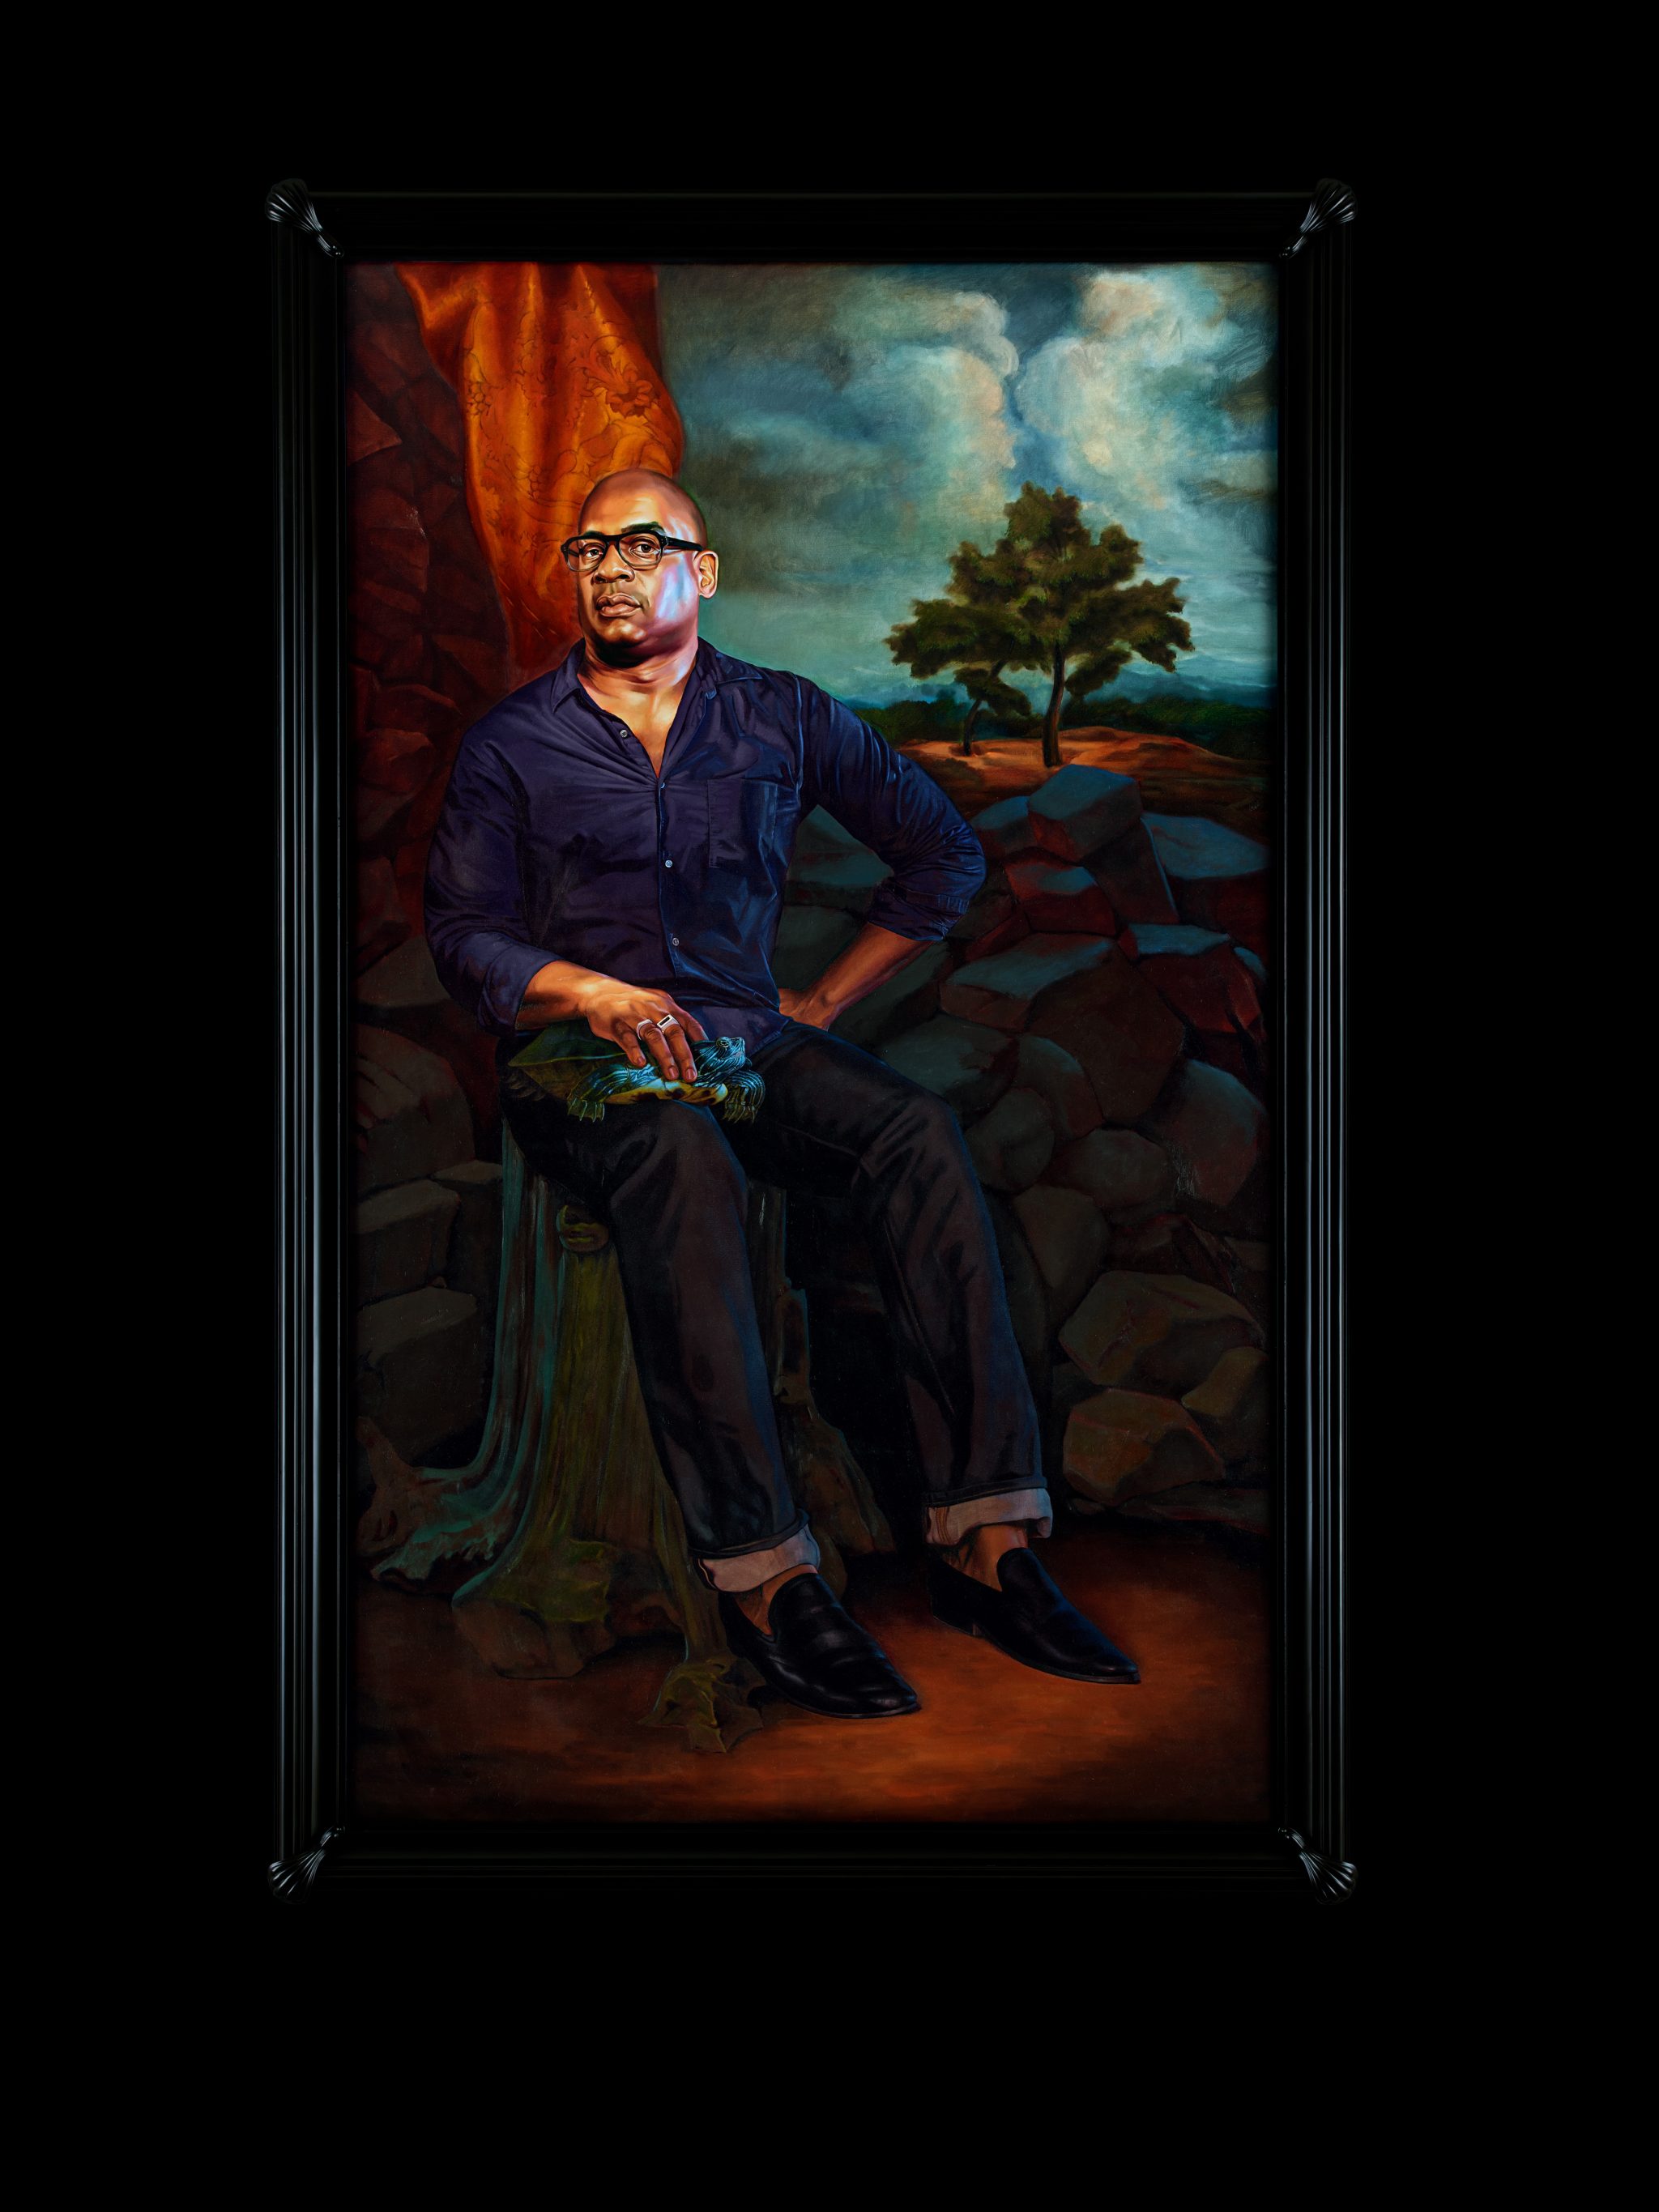 Kehinde Wiley | Trickster, Sean Kelly Gallery, New York City, USA, May 6 - June 17, 2017 | Portrait of Glenn Ligon, Hermes , 2017 Oil on Canvas.  | 11